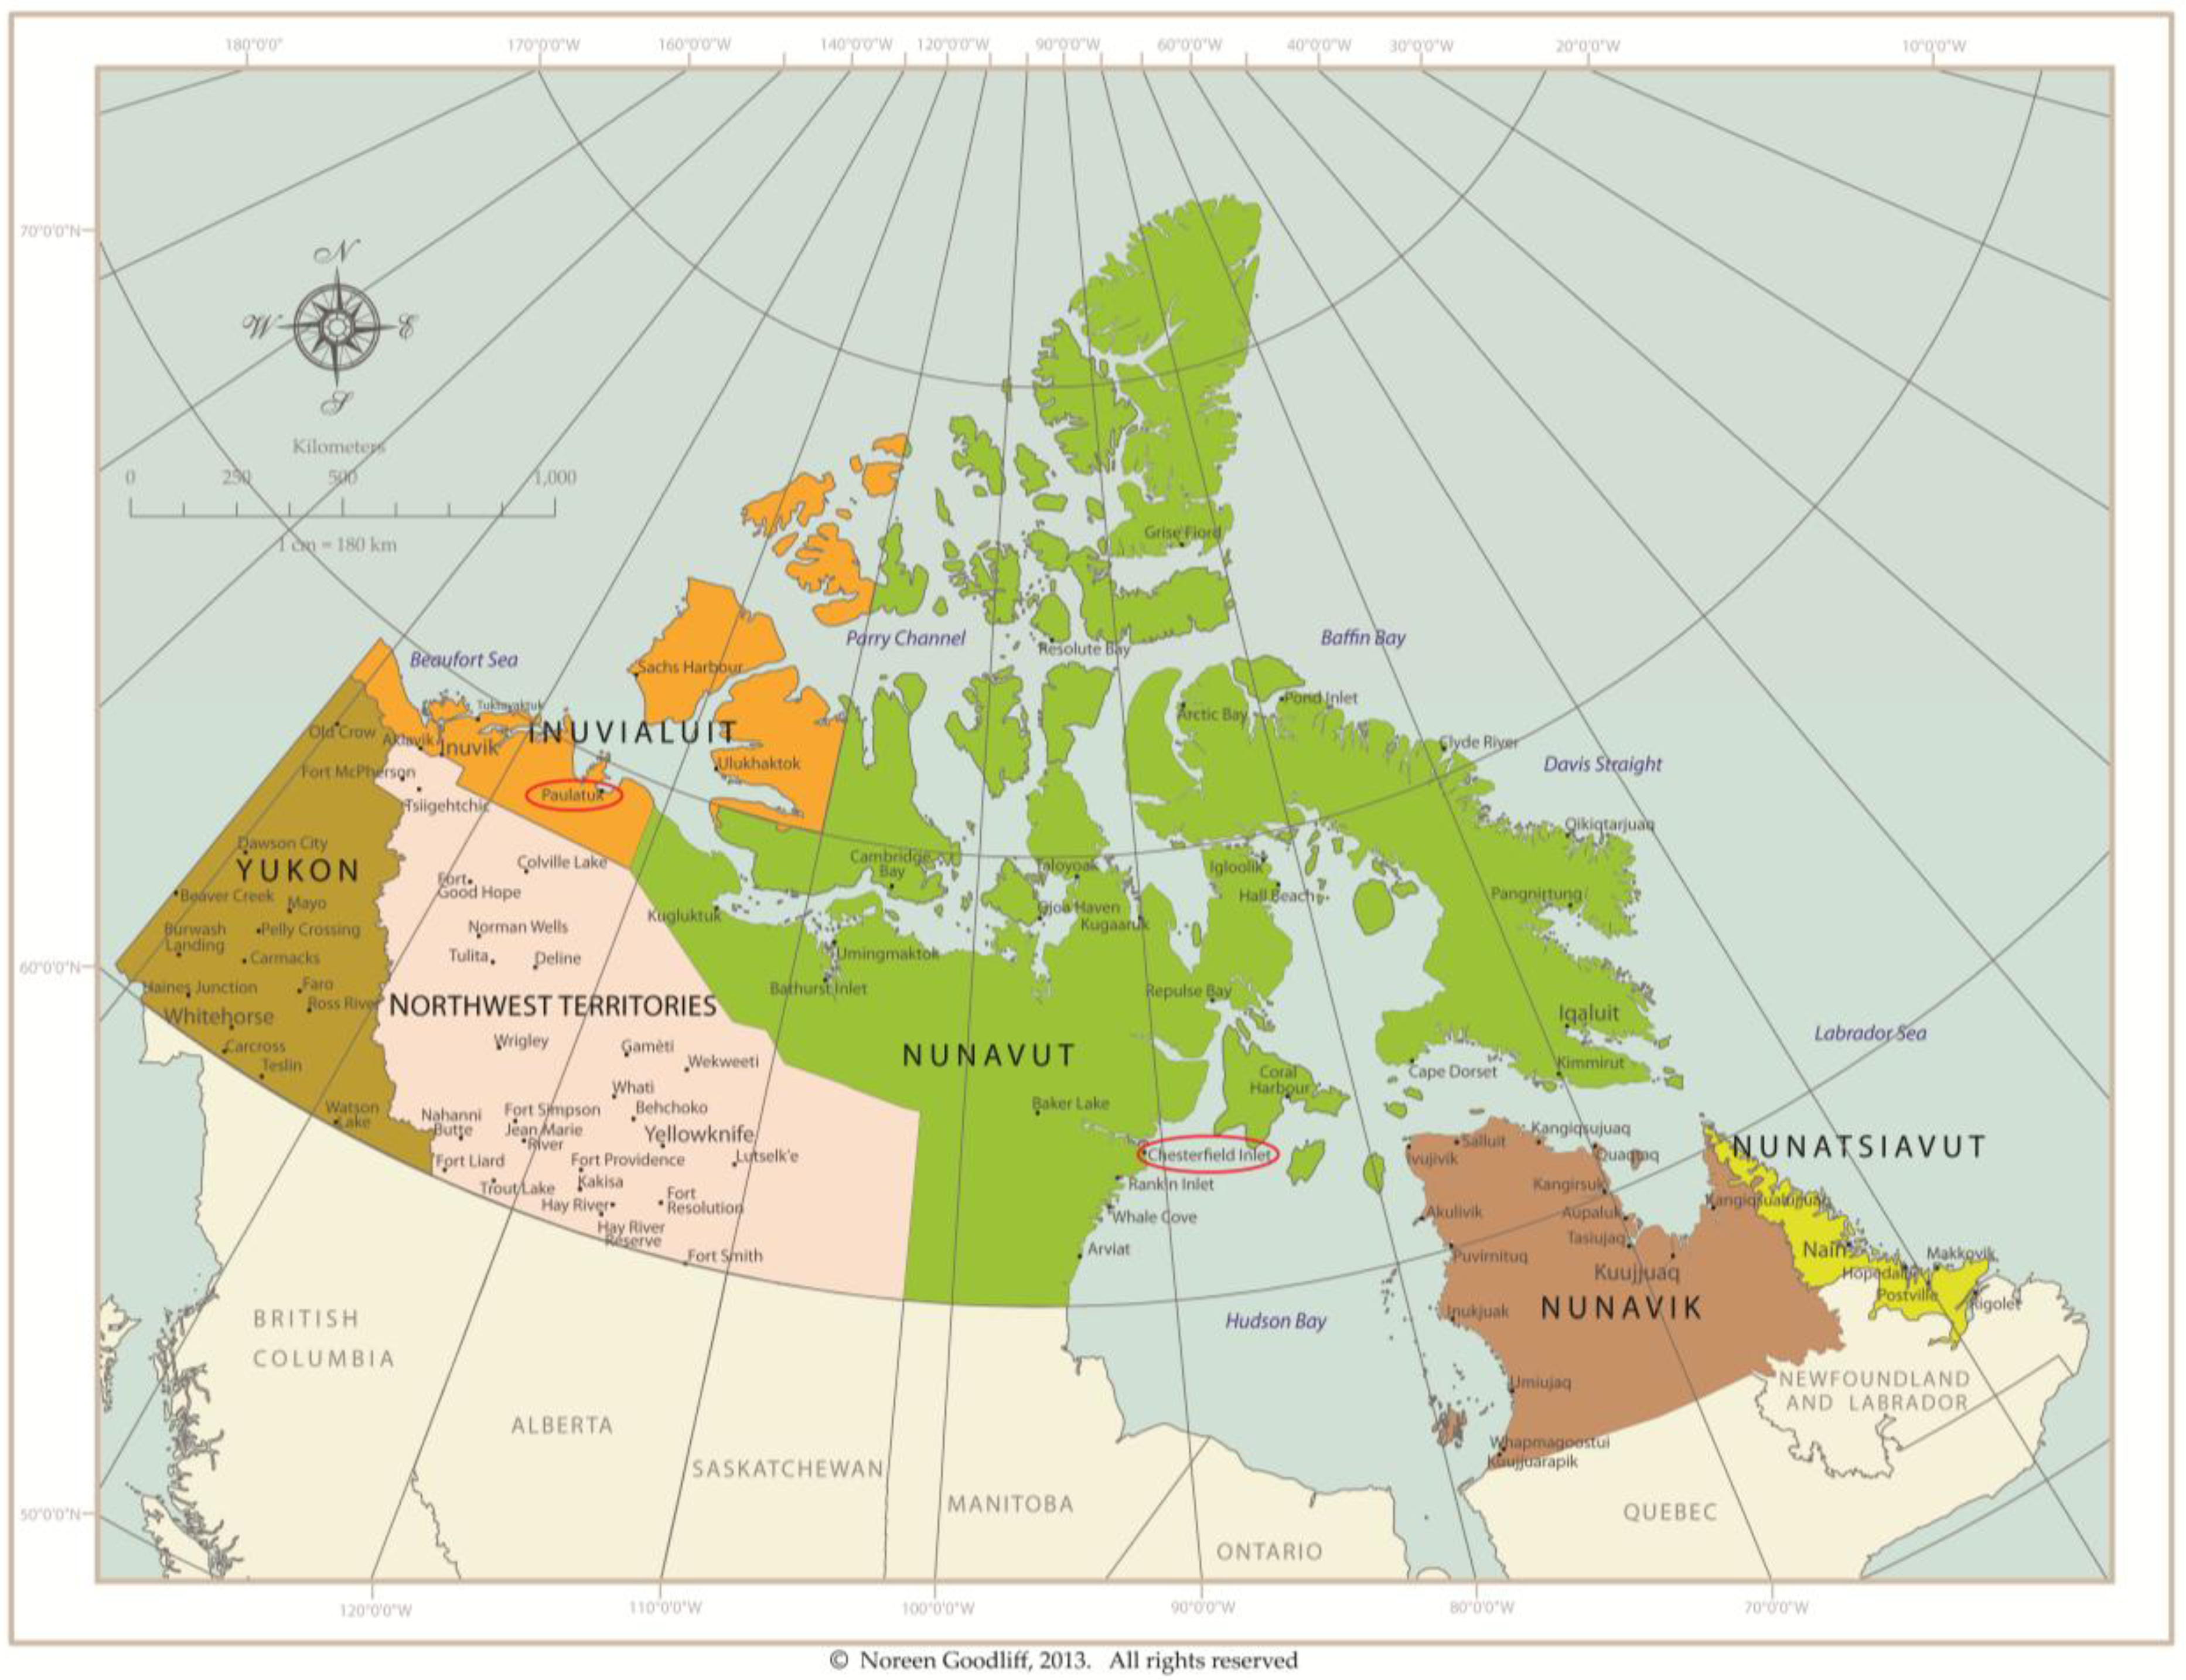 Канадский арктический архипелаг на карте северной. Канадский Арктический архипелаг на карте. Северная Америка канадский Арктический архипелаг. Остров канадский Арктический архипелаг на карте.